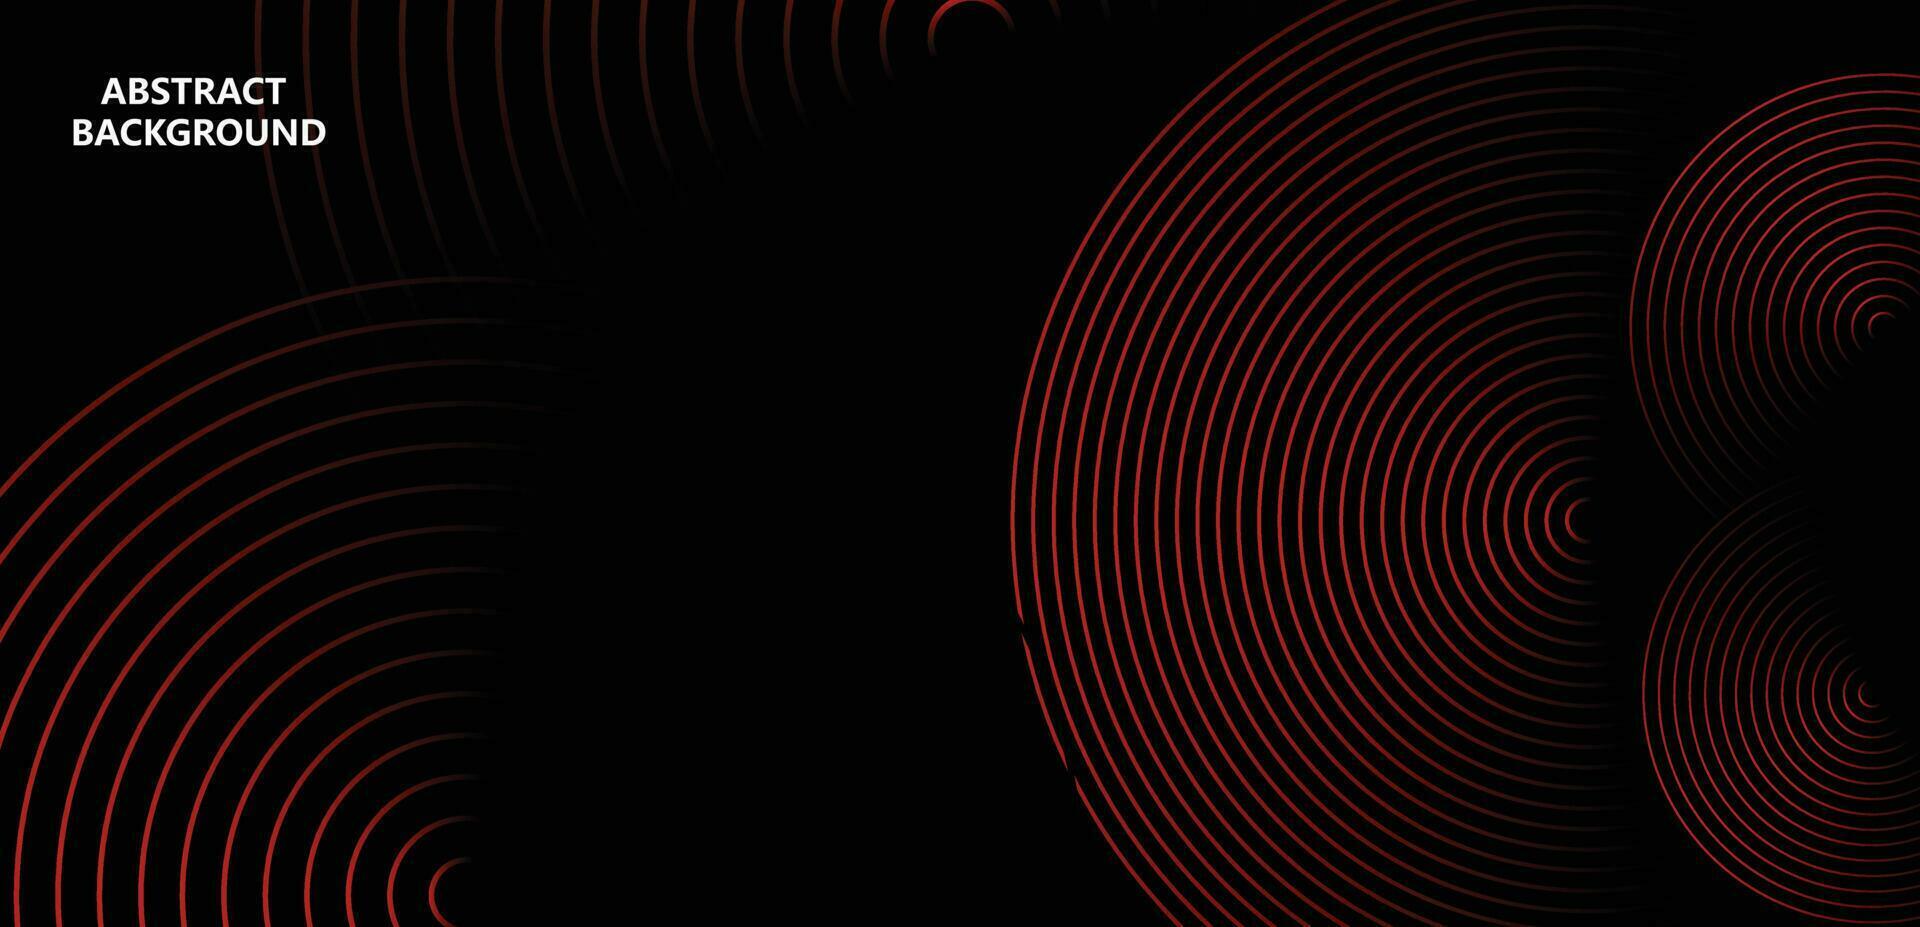 futuristic Line stripe pattern on white Wavy background. abstract modern background futuristic graphic energy sound waves technology concept design vector